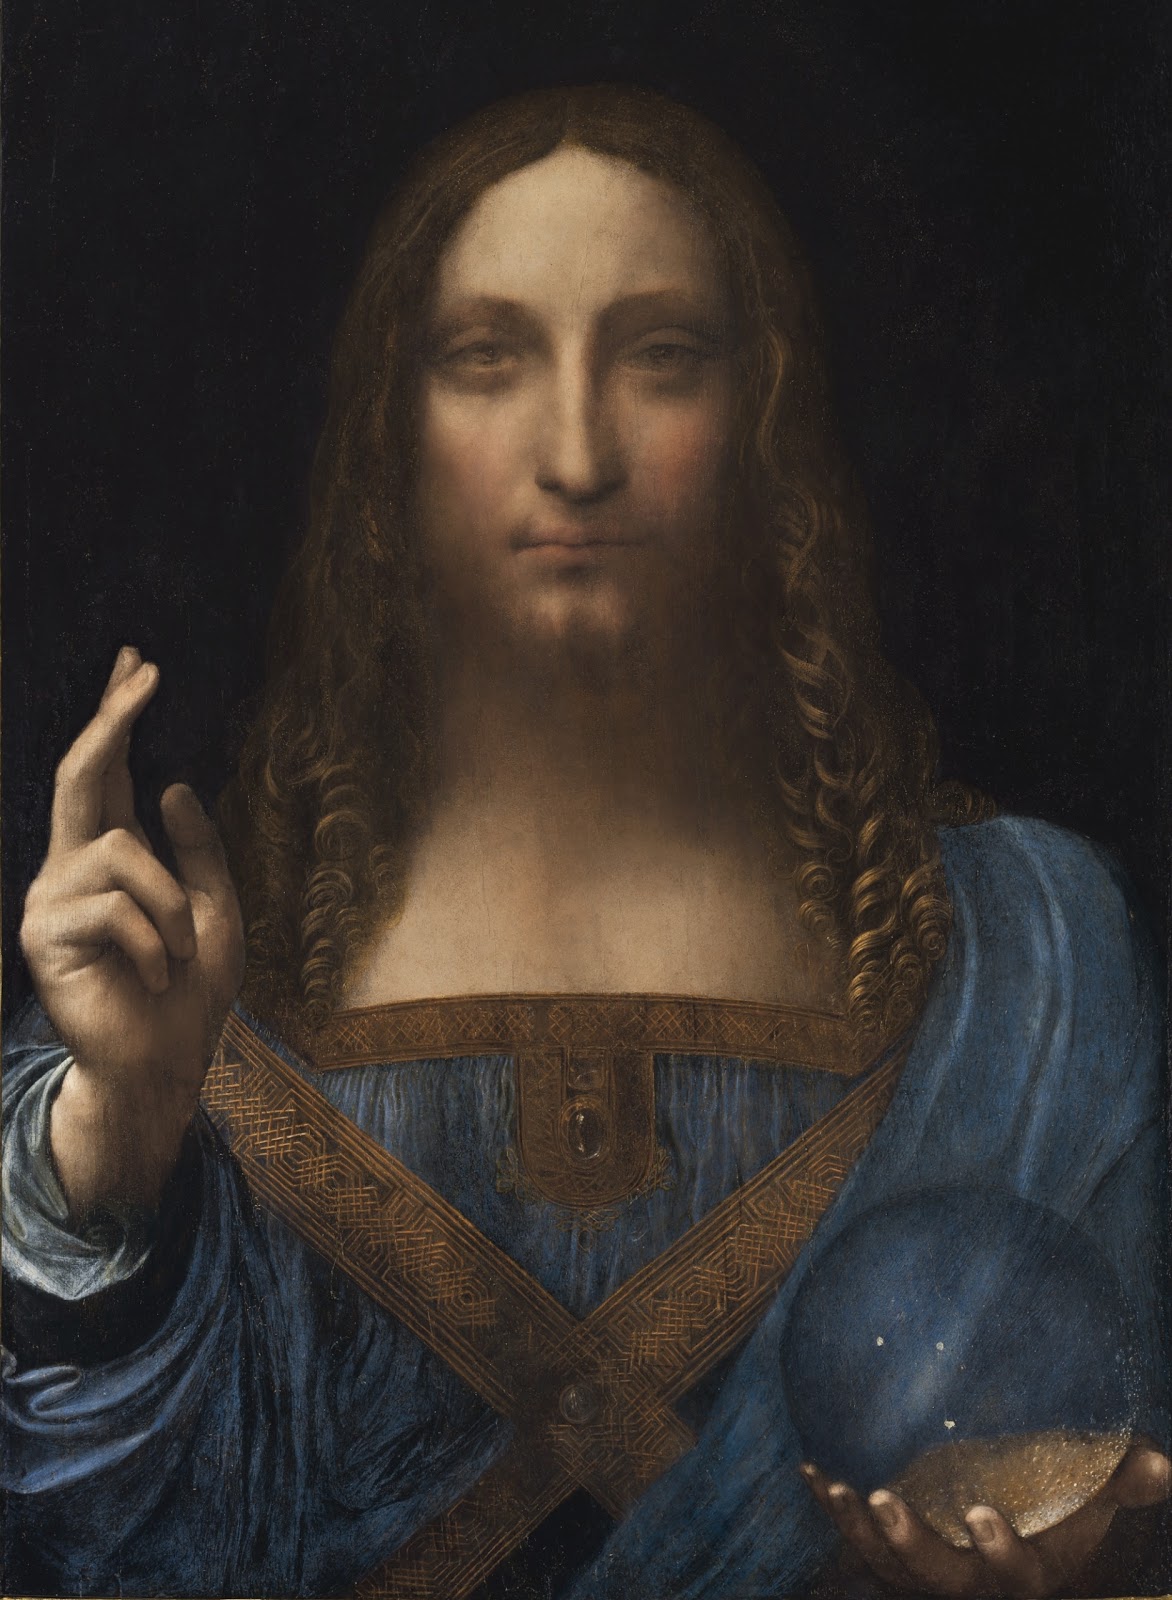 Leonardo+da+Vinci-1452-1519 (854).jpg